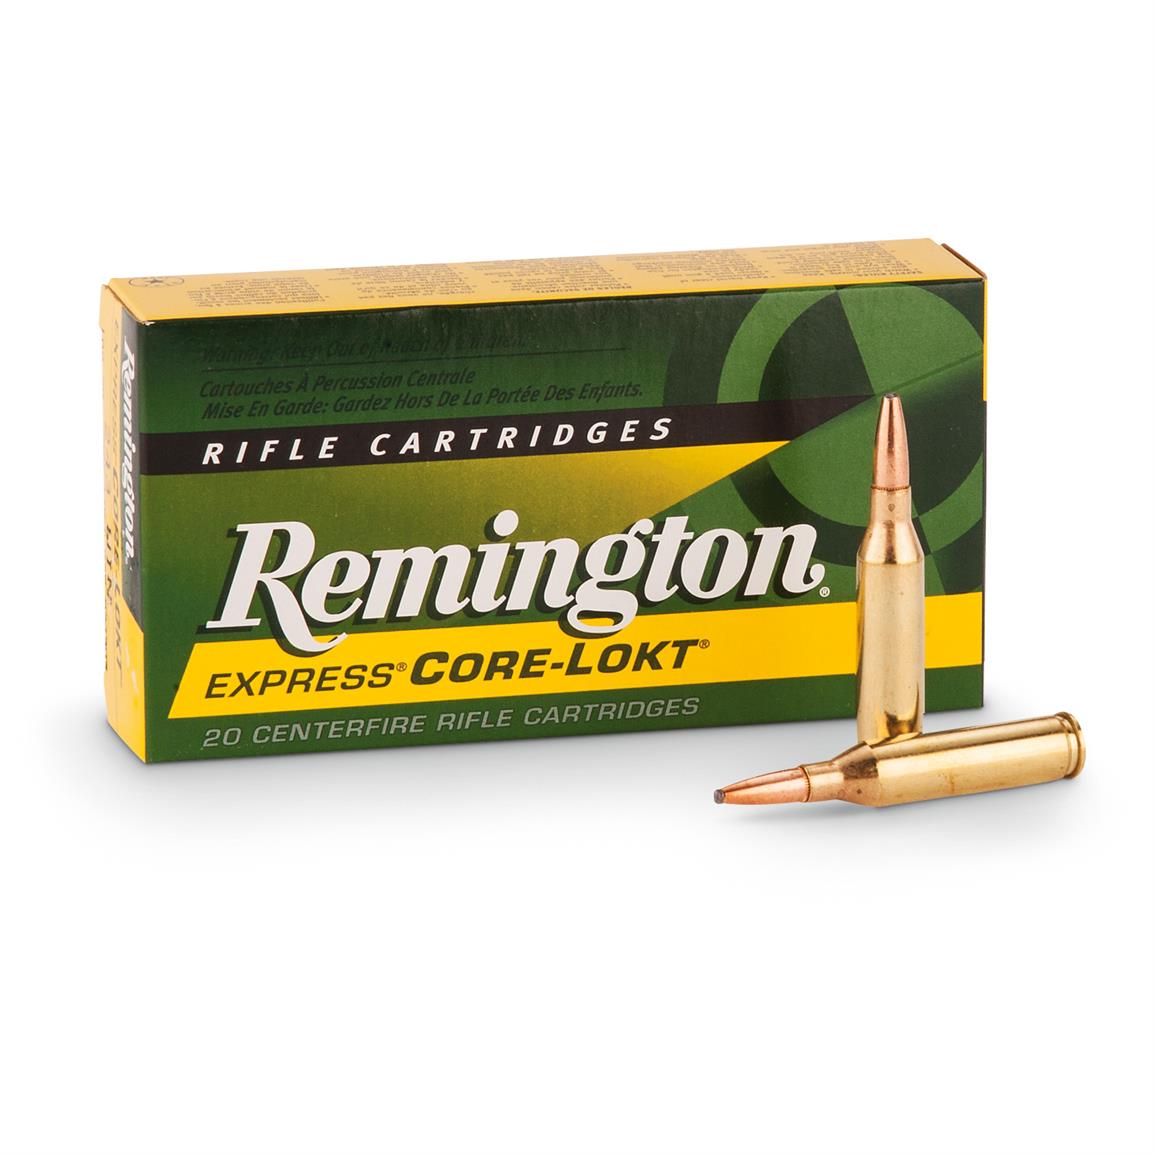 efterklang Reception eksplicit Remington CORE-LOKT, .308 Winchester, PSP, 180 Grain, 20 Rounds - 1113,  .308 Winchester Ammo at Sportsman's Guide